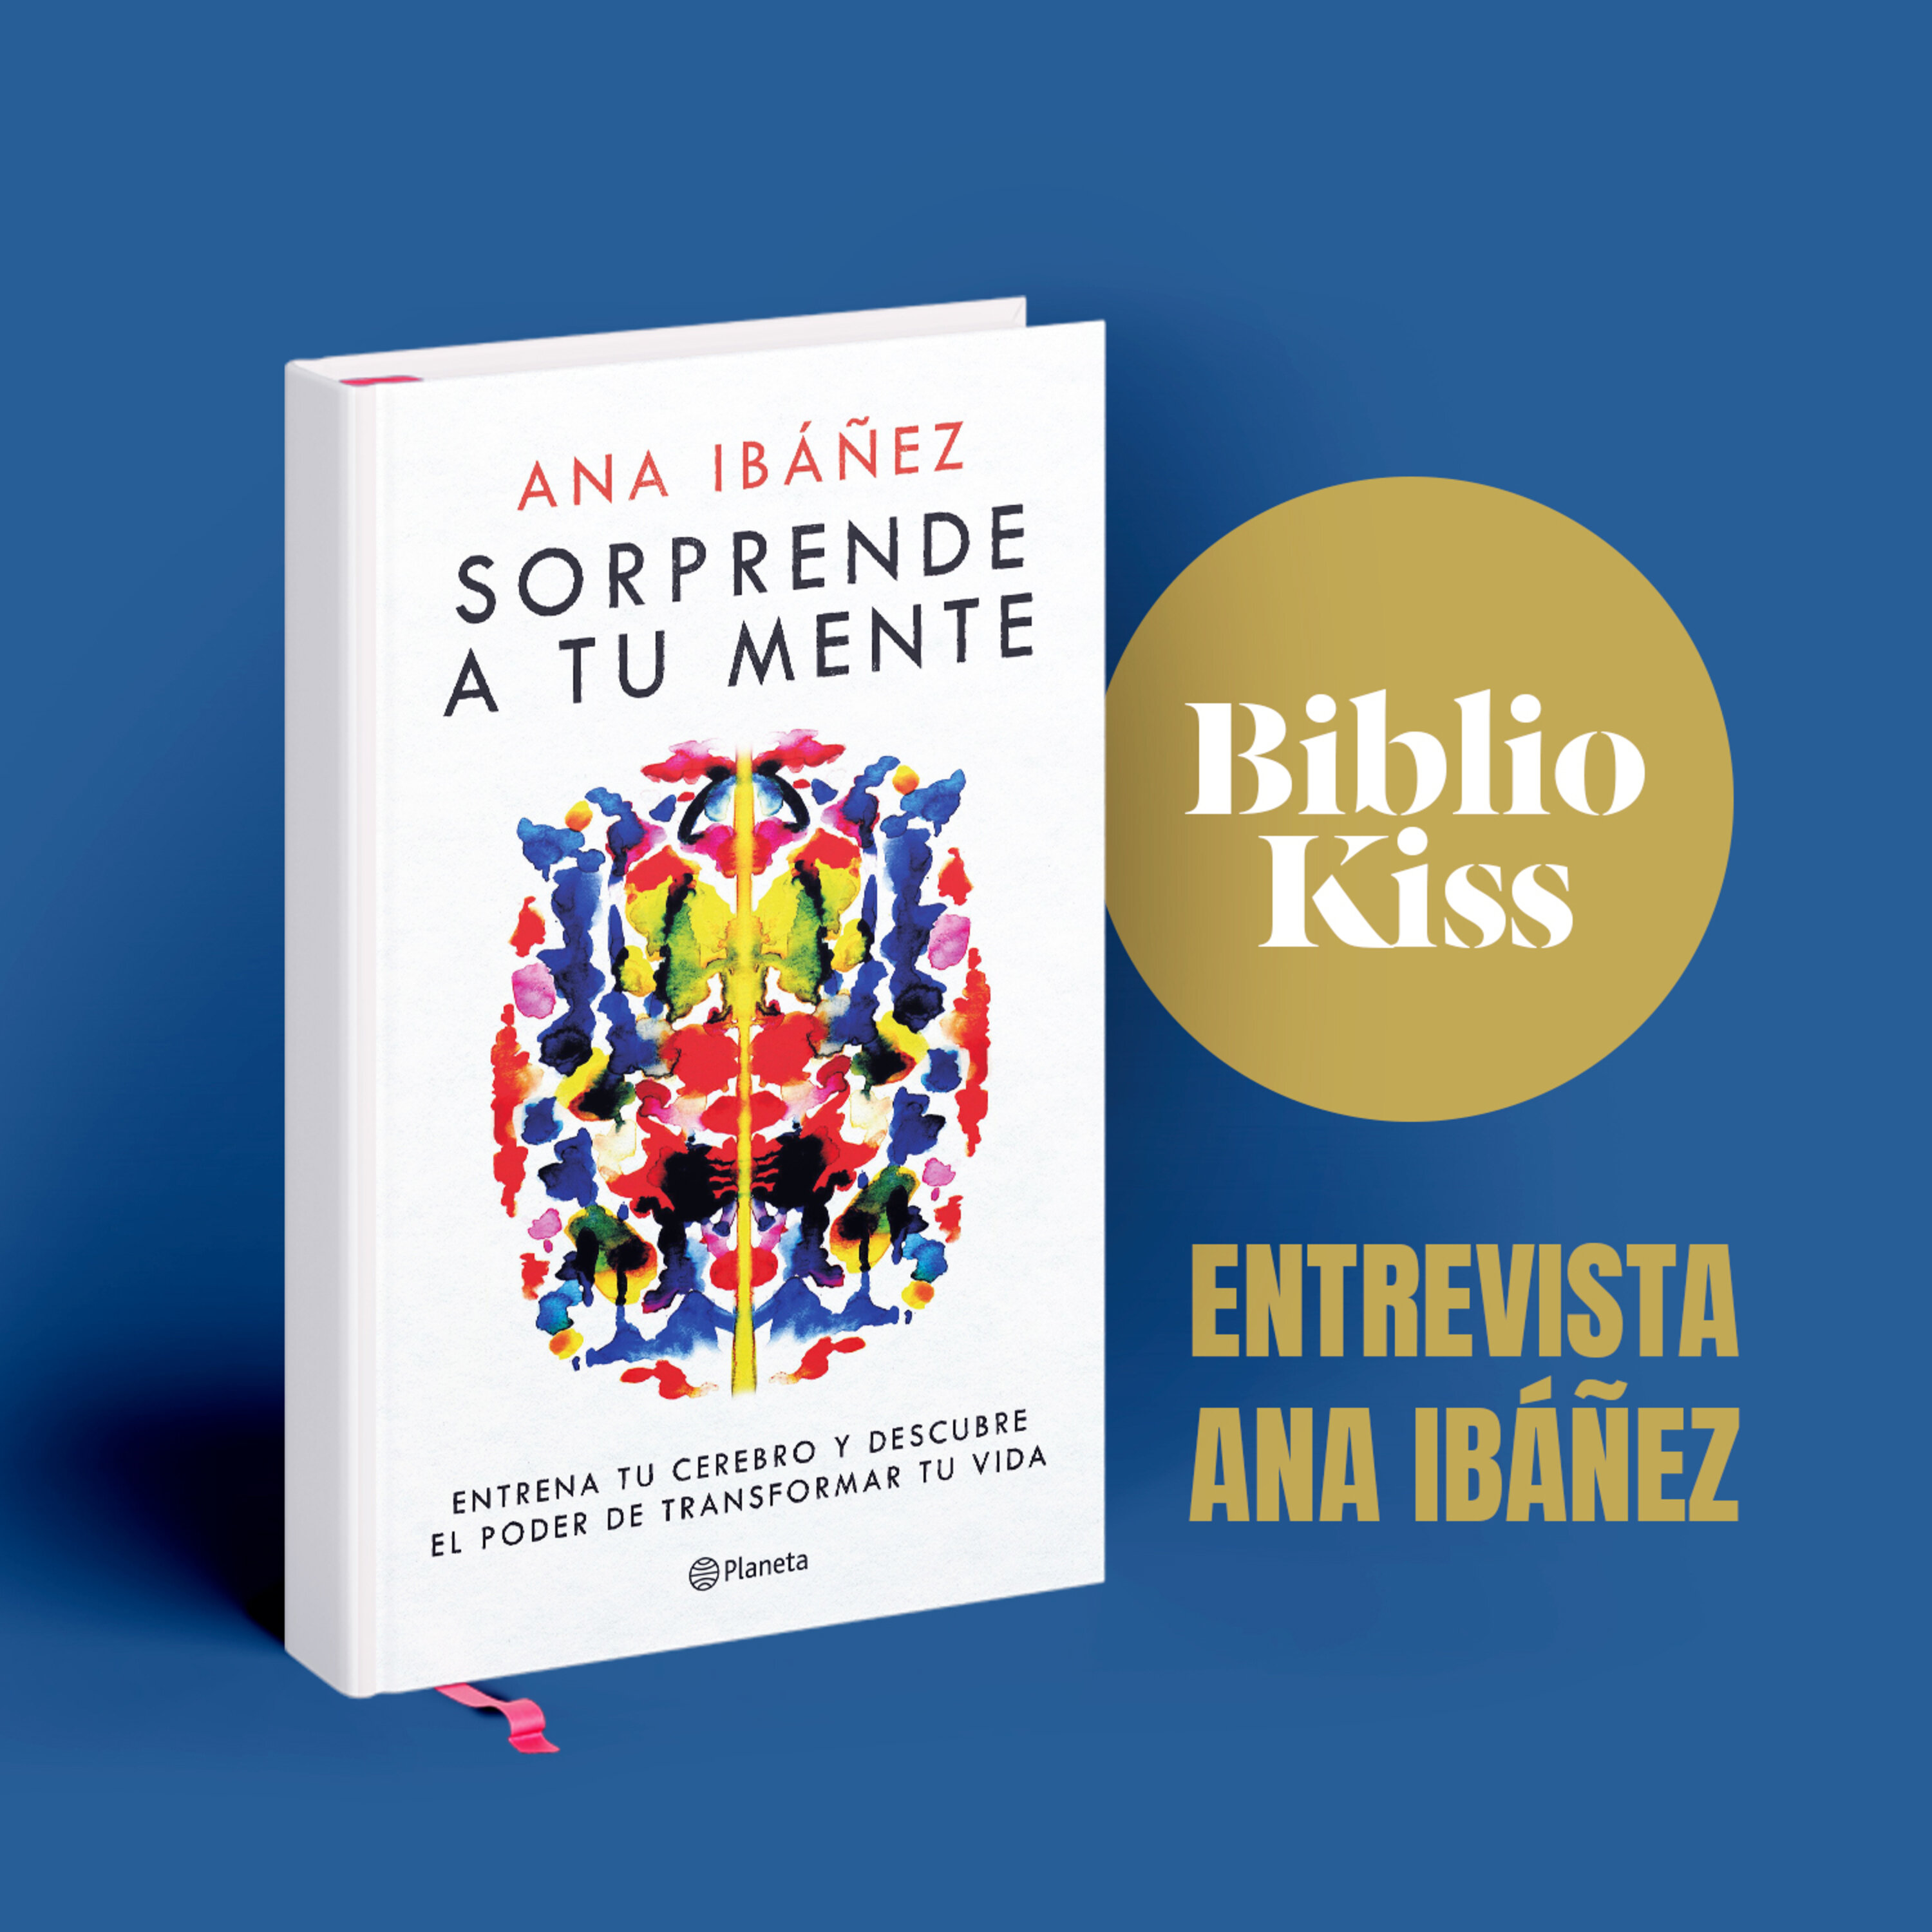 Ana Ibáñez nos presenta "Sorprende a tu mente"